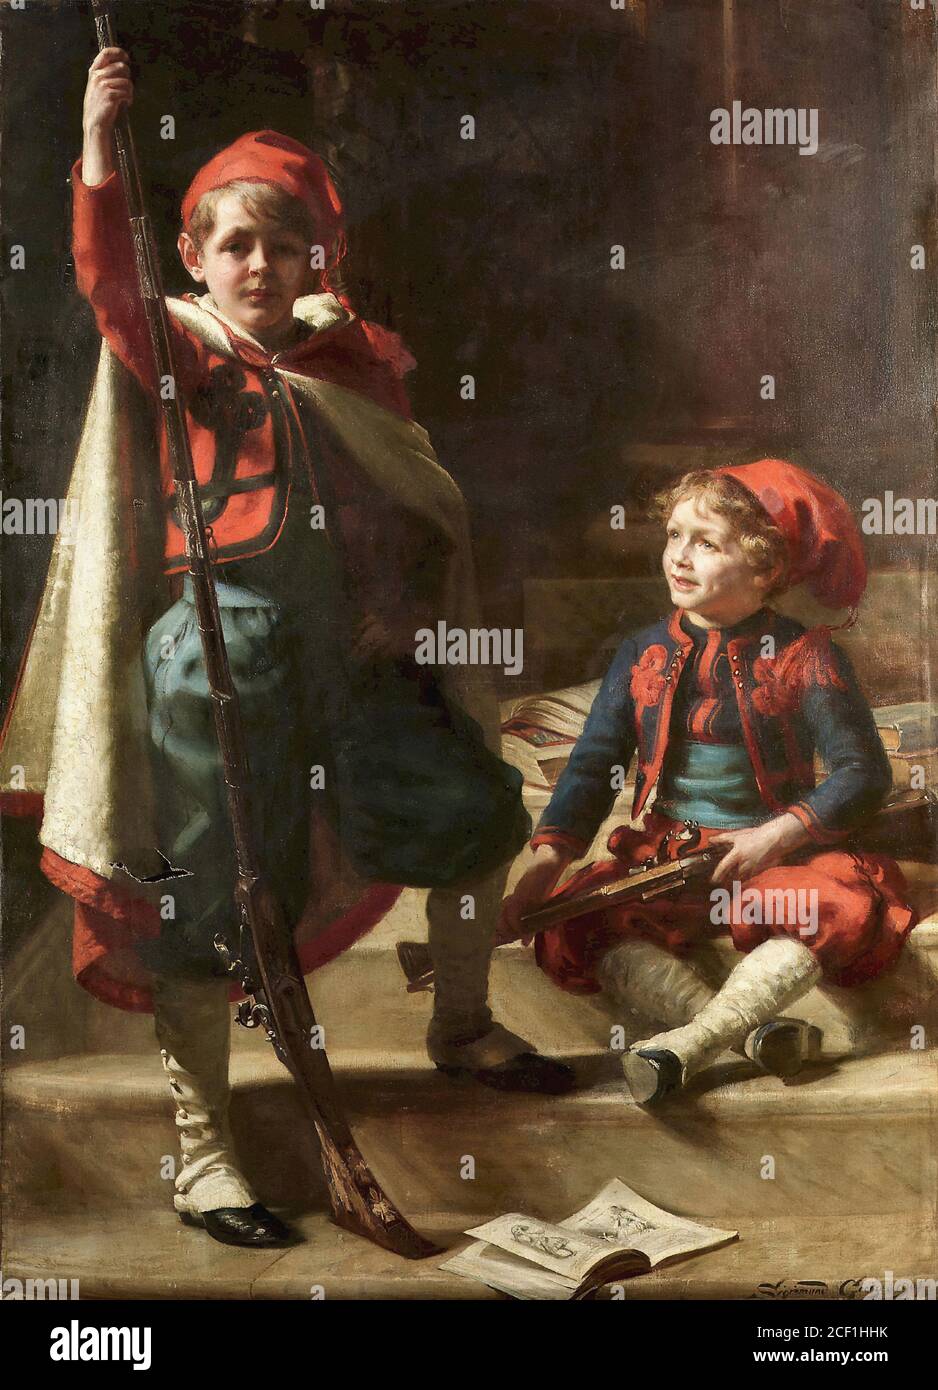 goetze, sigismund christian hubert - Zouaves. Portrait of Francis and Philip Mond, Sons of Emile Mond - 19230753561 4dc4ffbf28 o Stock Photo